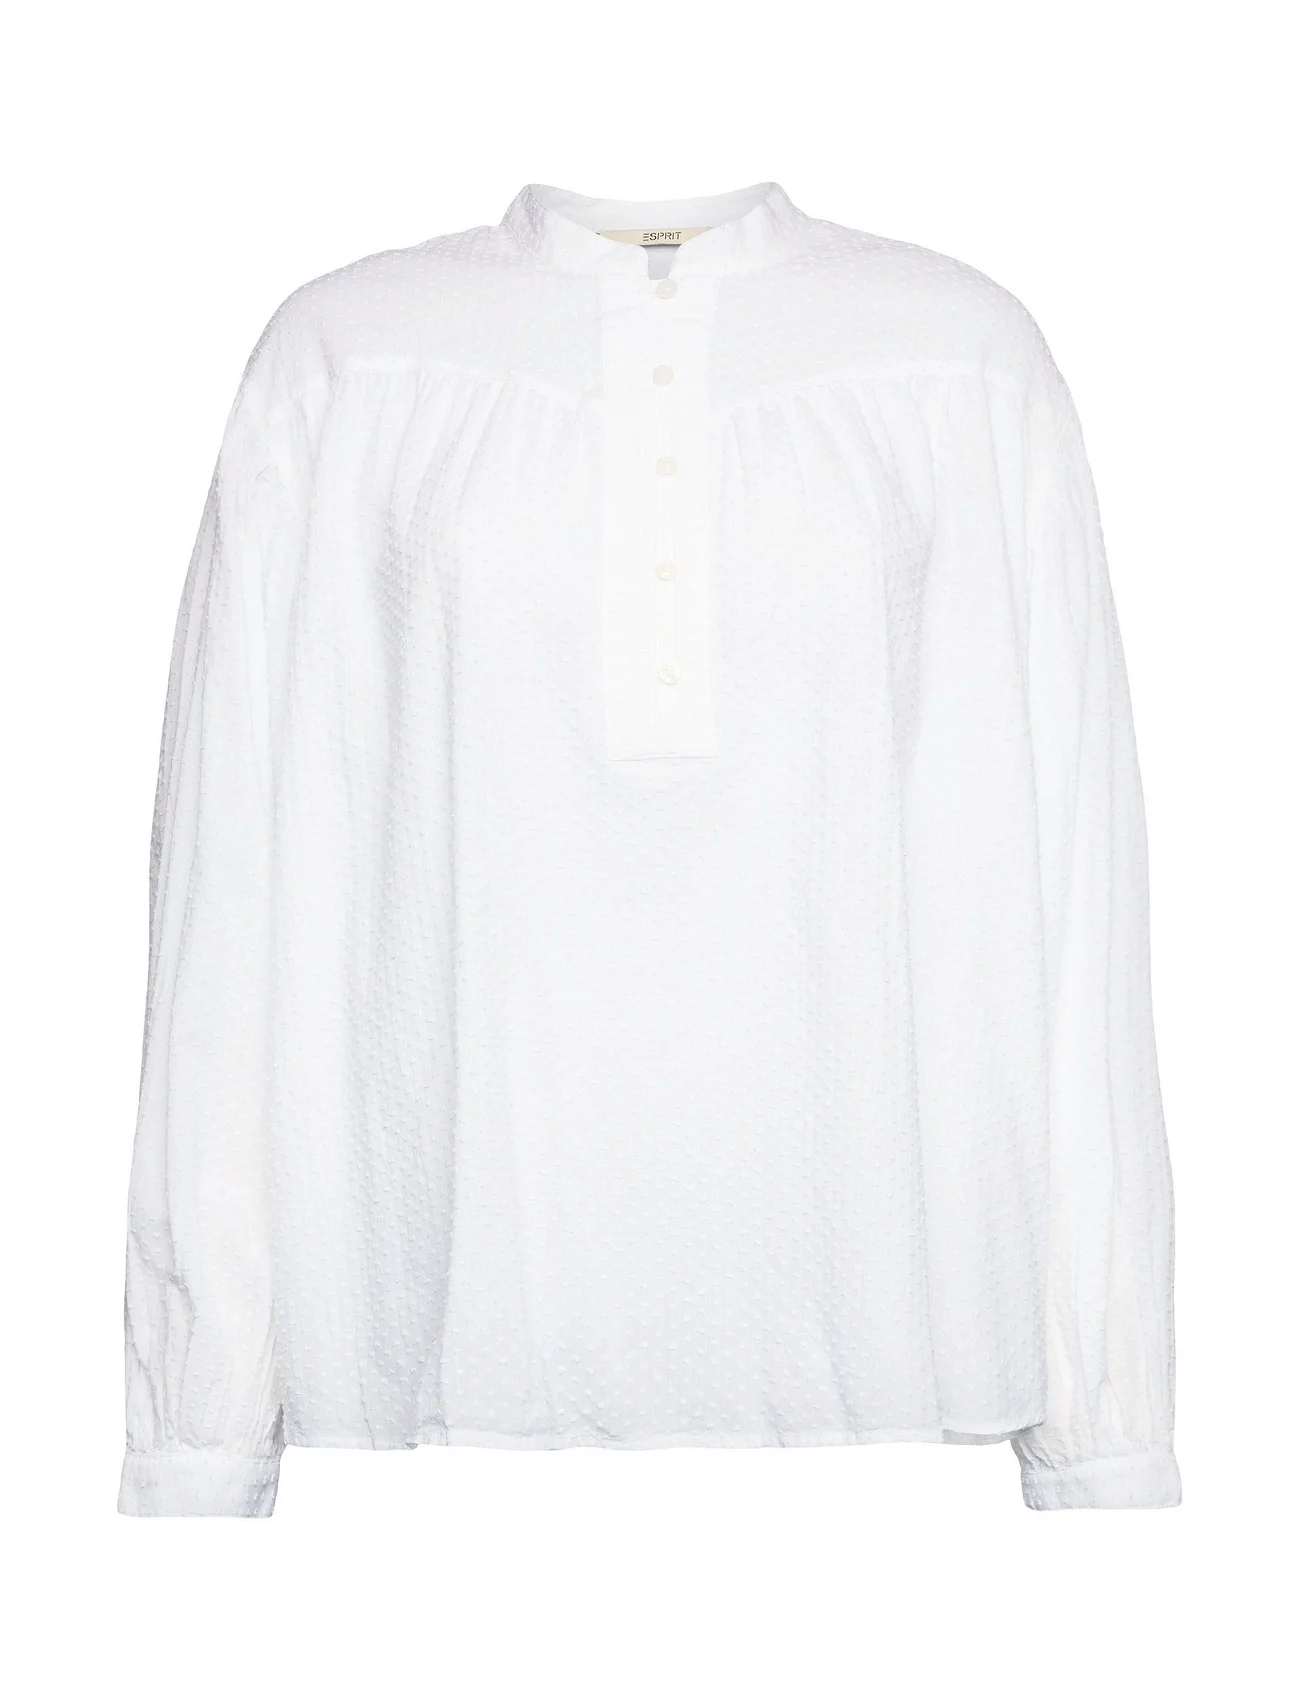 Esprit Casual - Dobby texture blouse - langärmlige blusen - white - 0